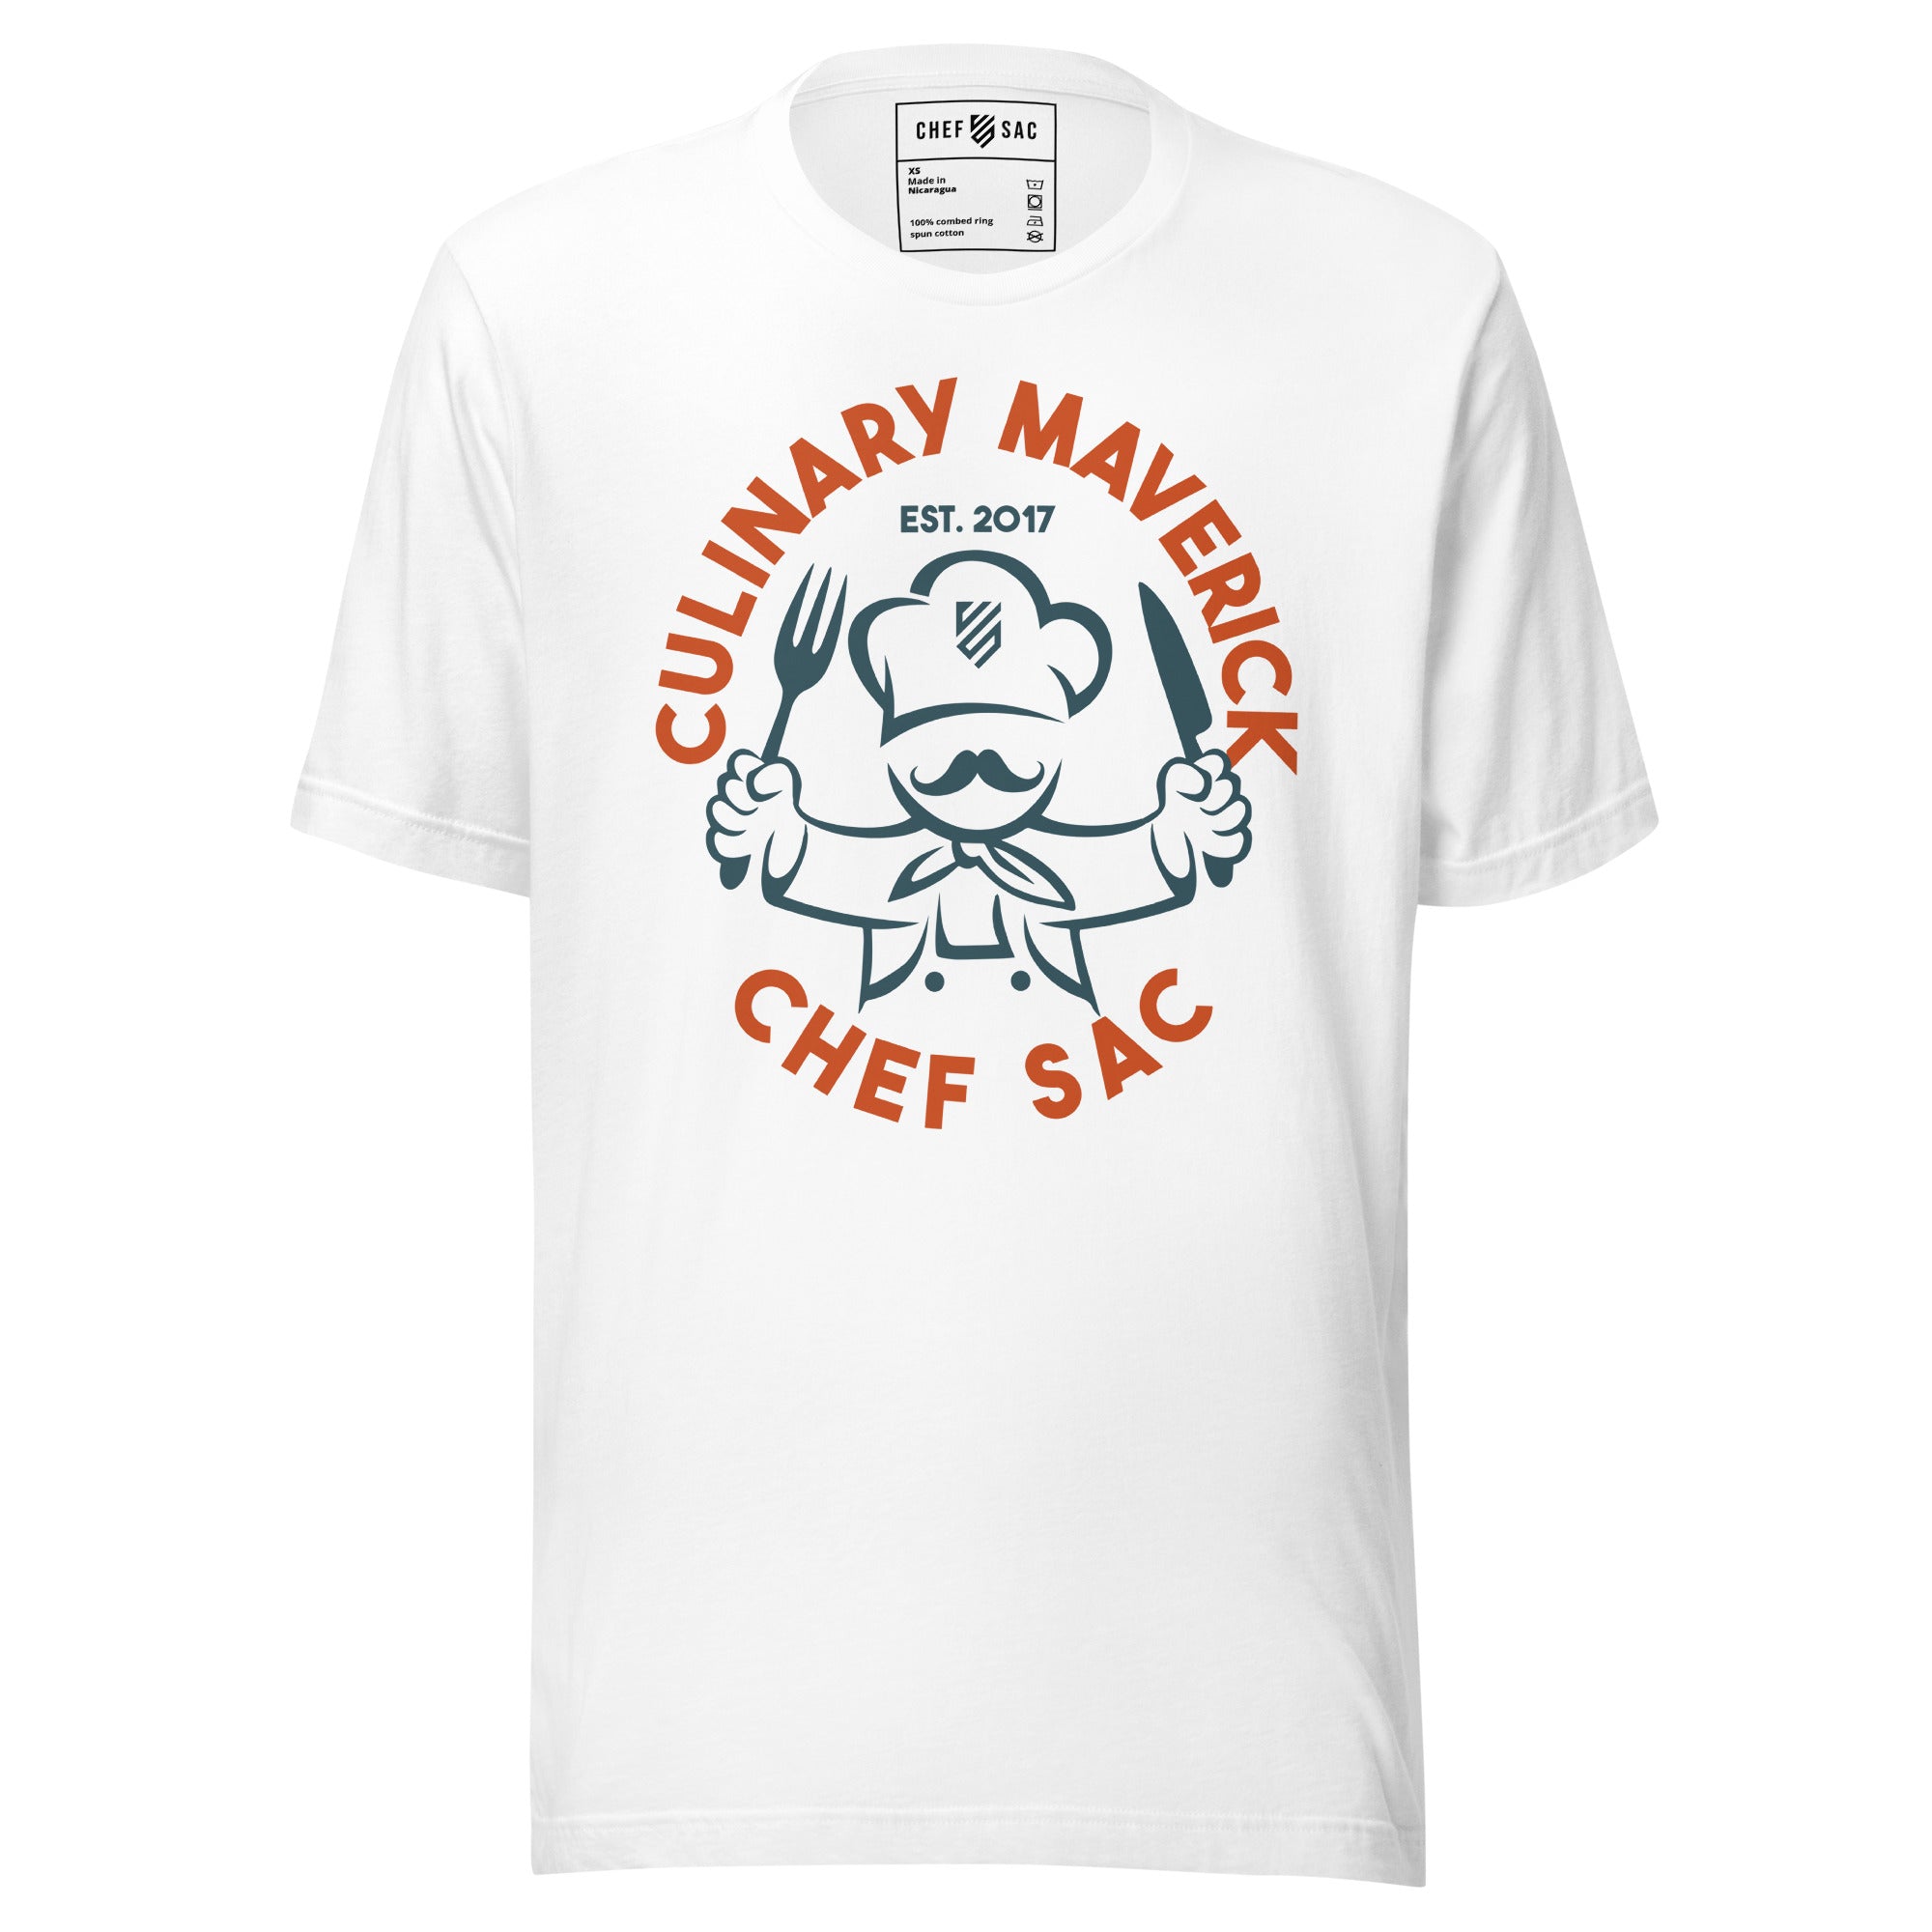 Mr. Chef Sac Culinary Maverick T-Shirt